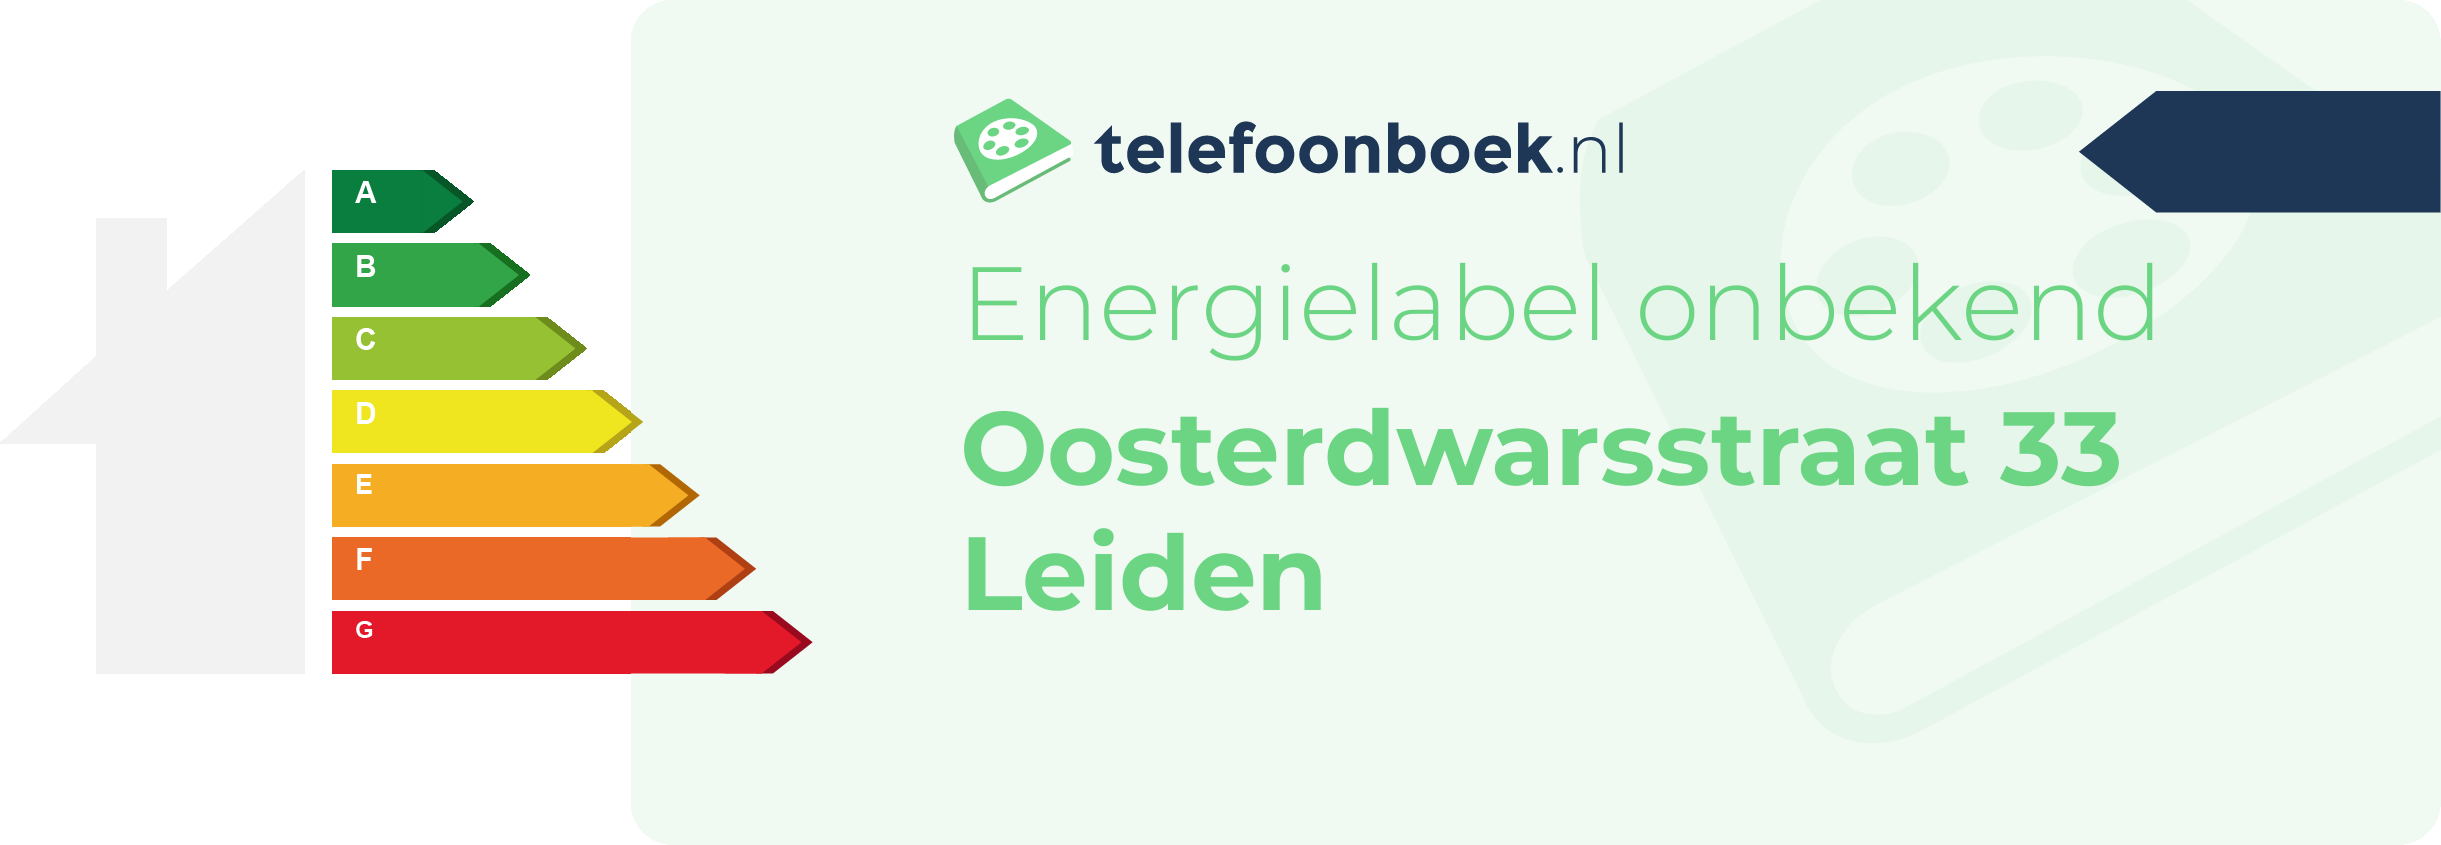 Energielabel Oosterdwarsstraat 33 Leiden